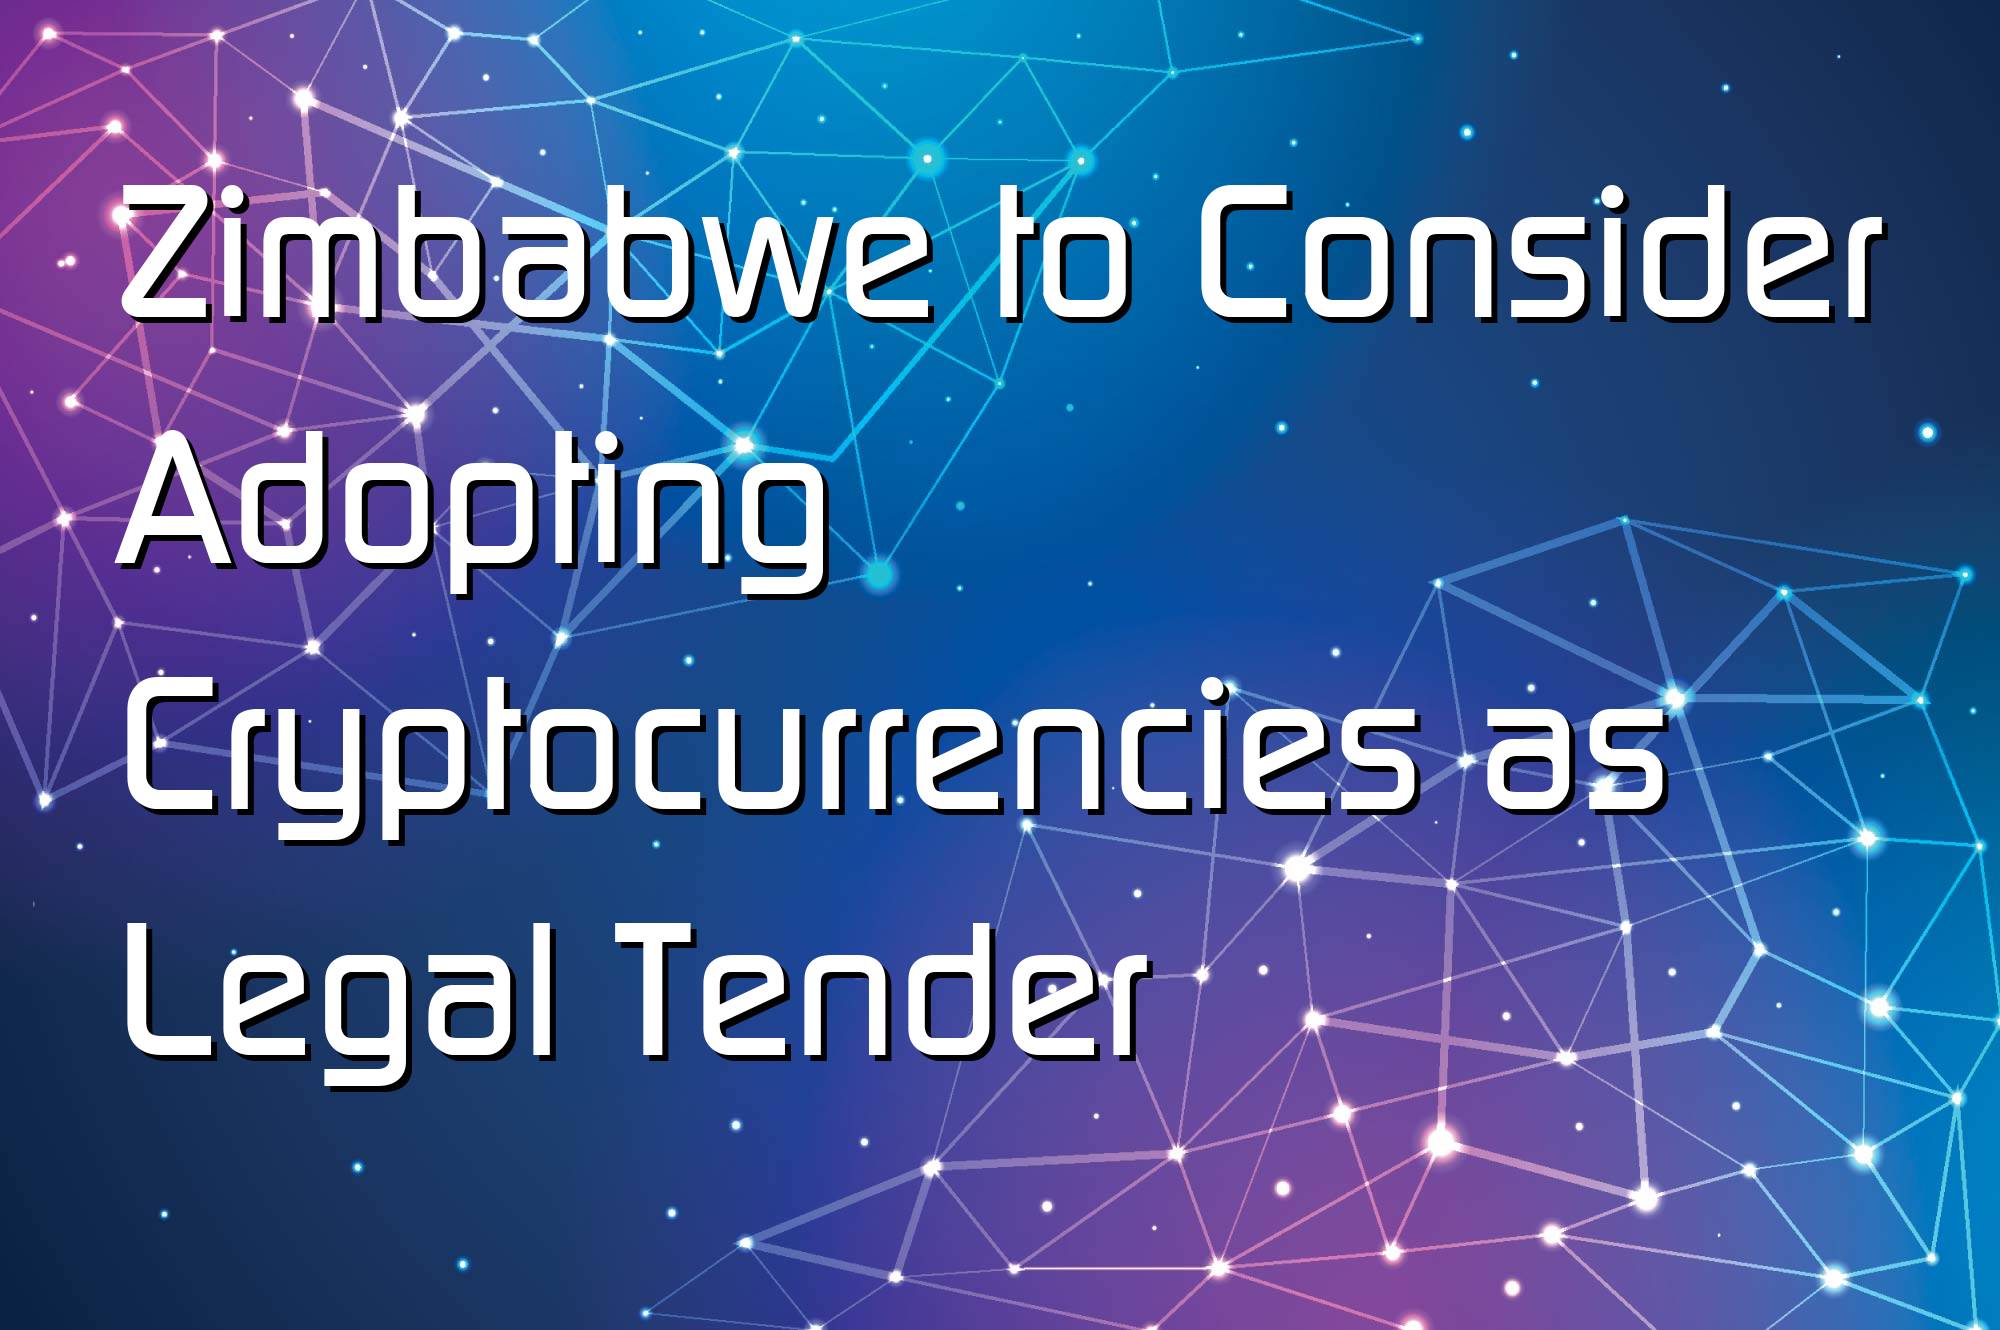 @$66013: Zimbabwe to Consider Adopting Cryptocurrencies as Legal Tender